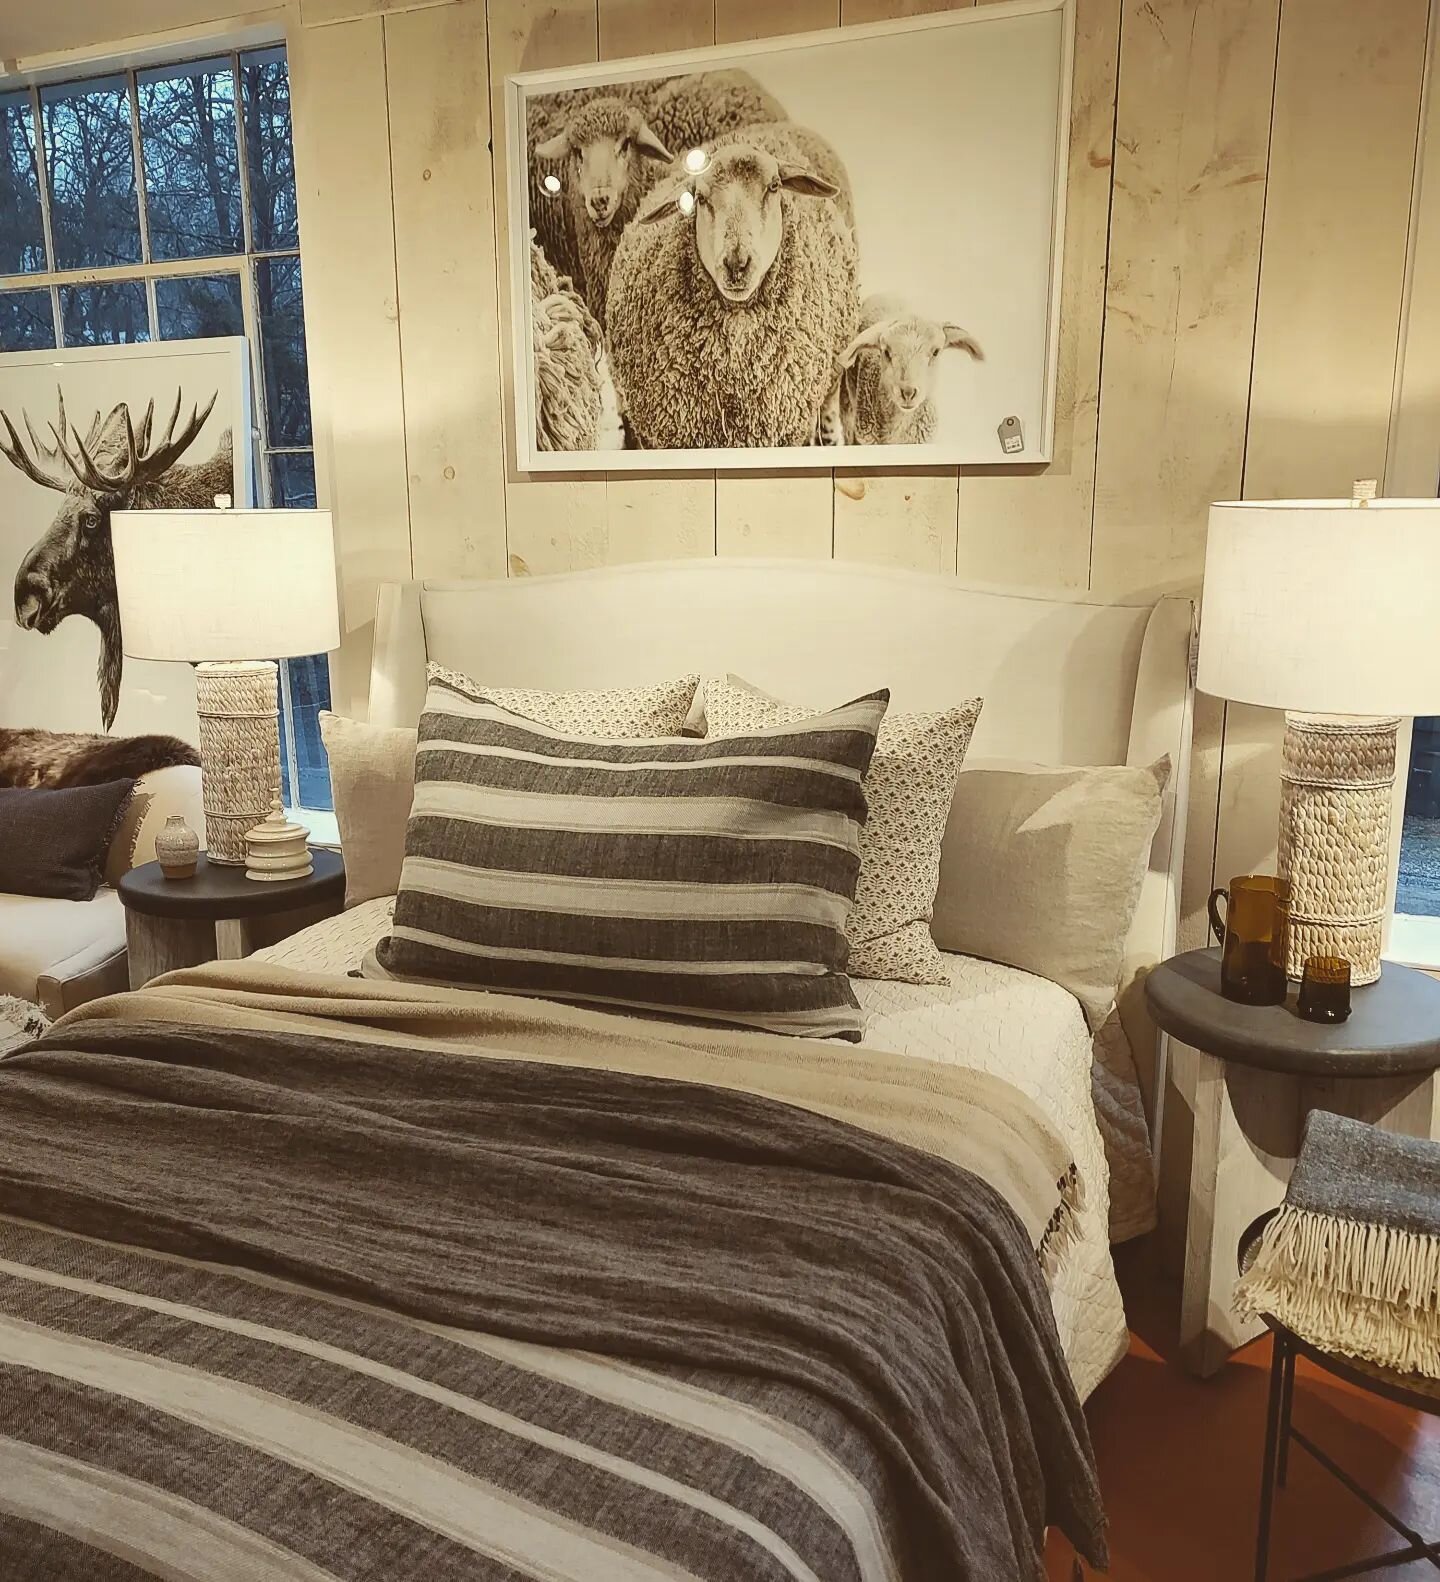 More new luxury bedding has arrived.  Refresh your bedroom!  @libecobelgianlinen @tl.at.home @coyuchi @neemliving #openeveryday #36years #newprestonct #explorewashington #washingtonbusinessassociation